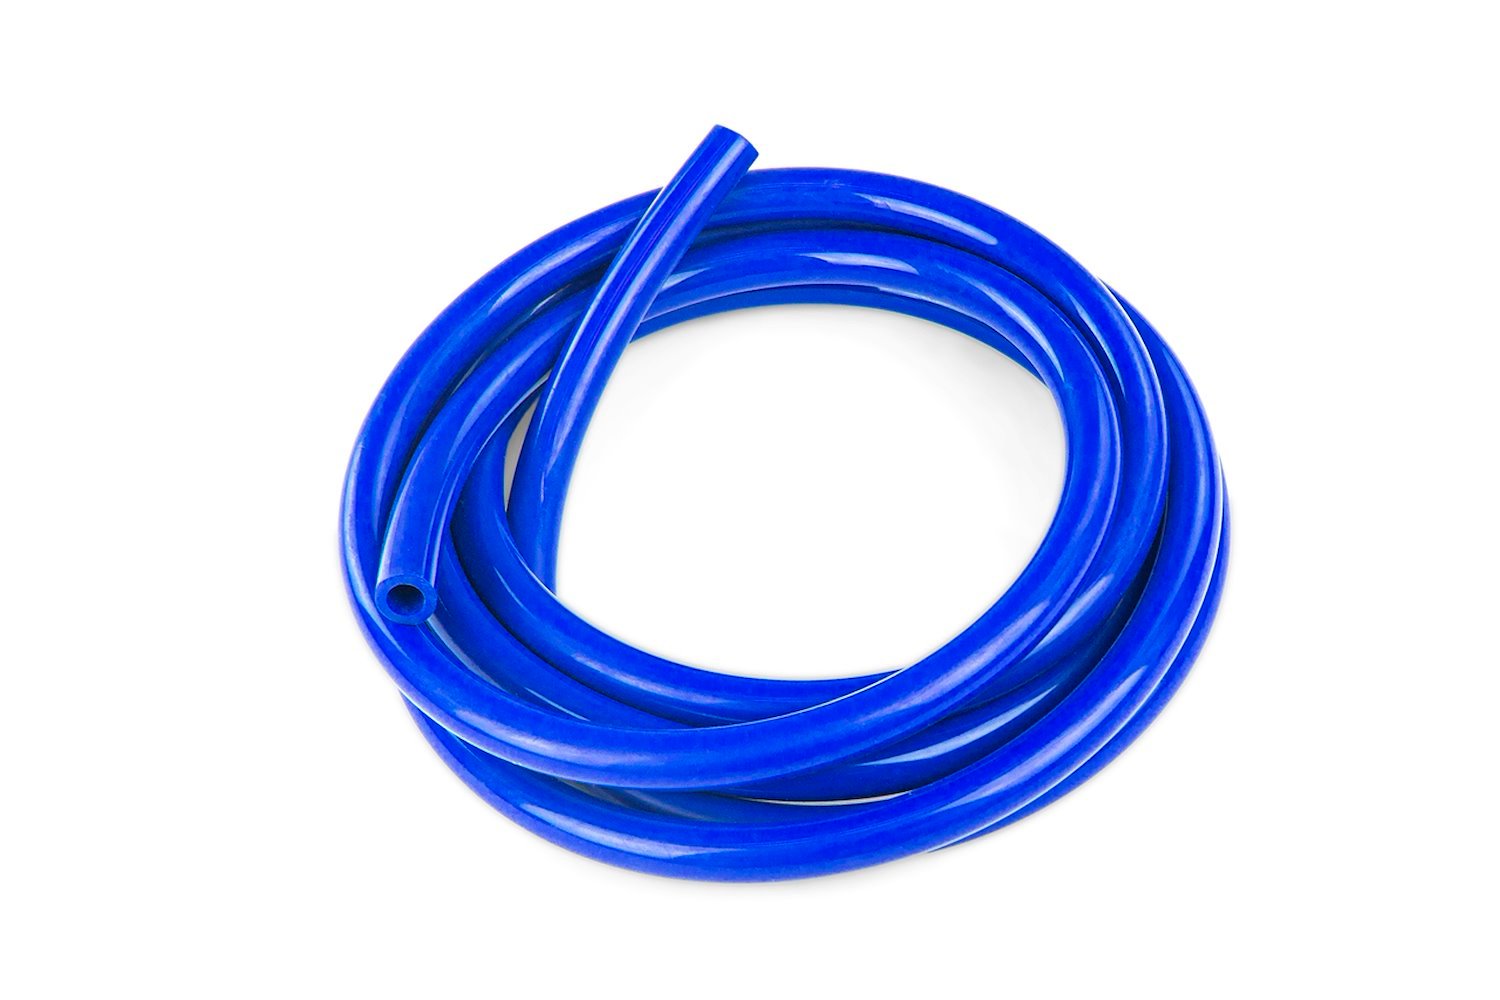 HTSVH4-BLUEx25 High-Temperature Silicone Vacuum Hose Tubing, 5/32 in. ID, 25 ft. Roll, Blue